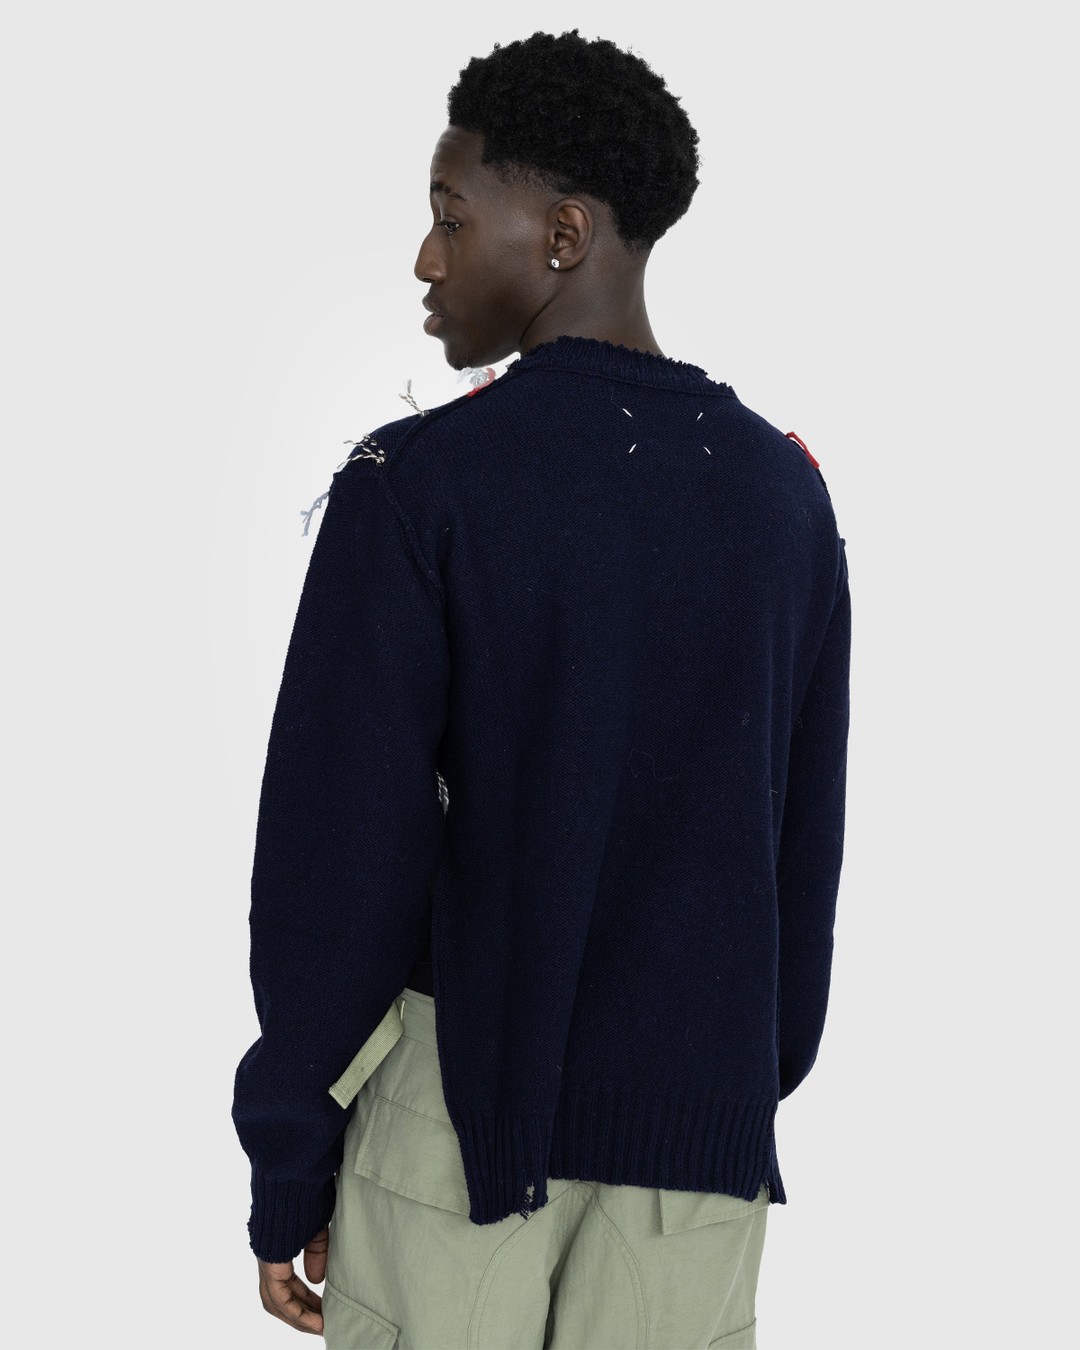 Maison Margiela – Distressed Wool Crewneck Sweater Multi - Sweats - Multi - Image 3